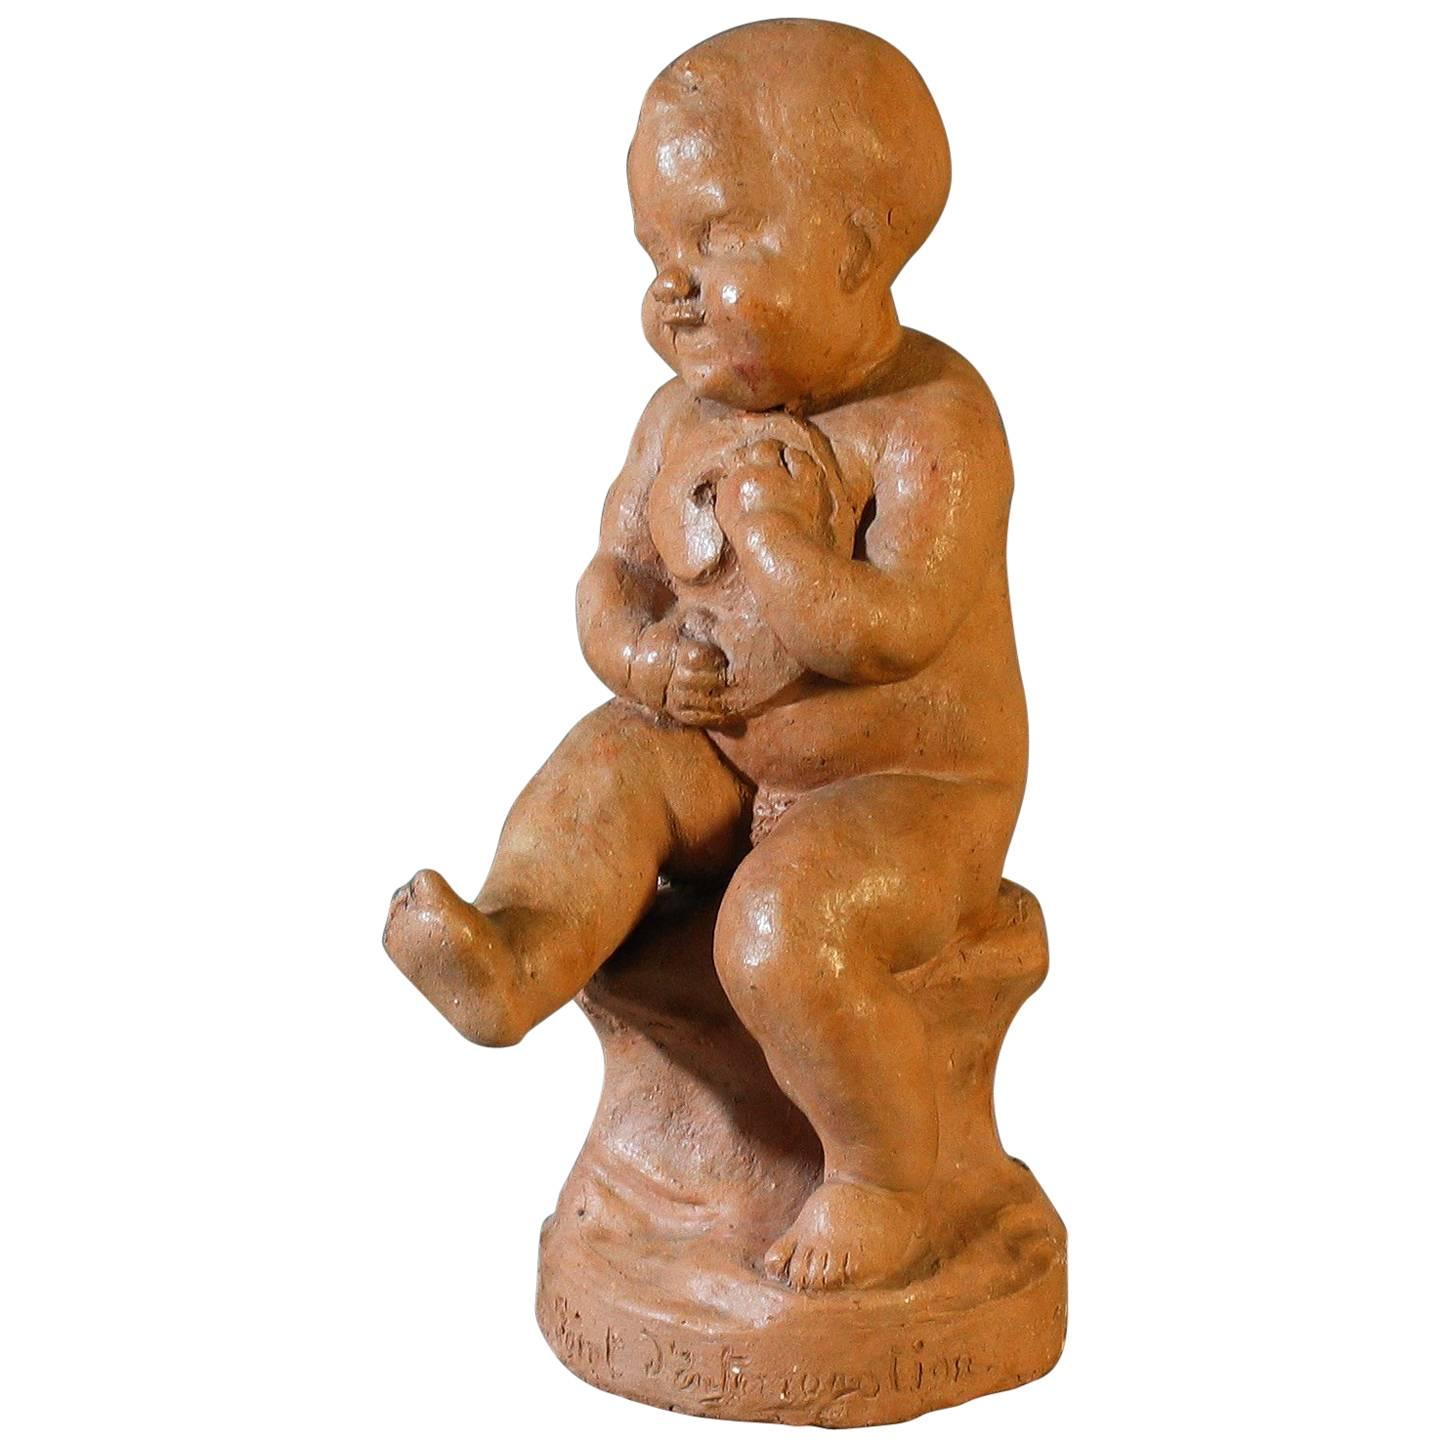 French Terracotta Sculpture, 20th Century by Louis Auguste Joseph Bertrand